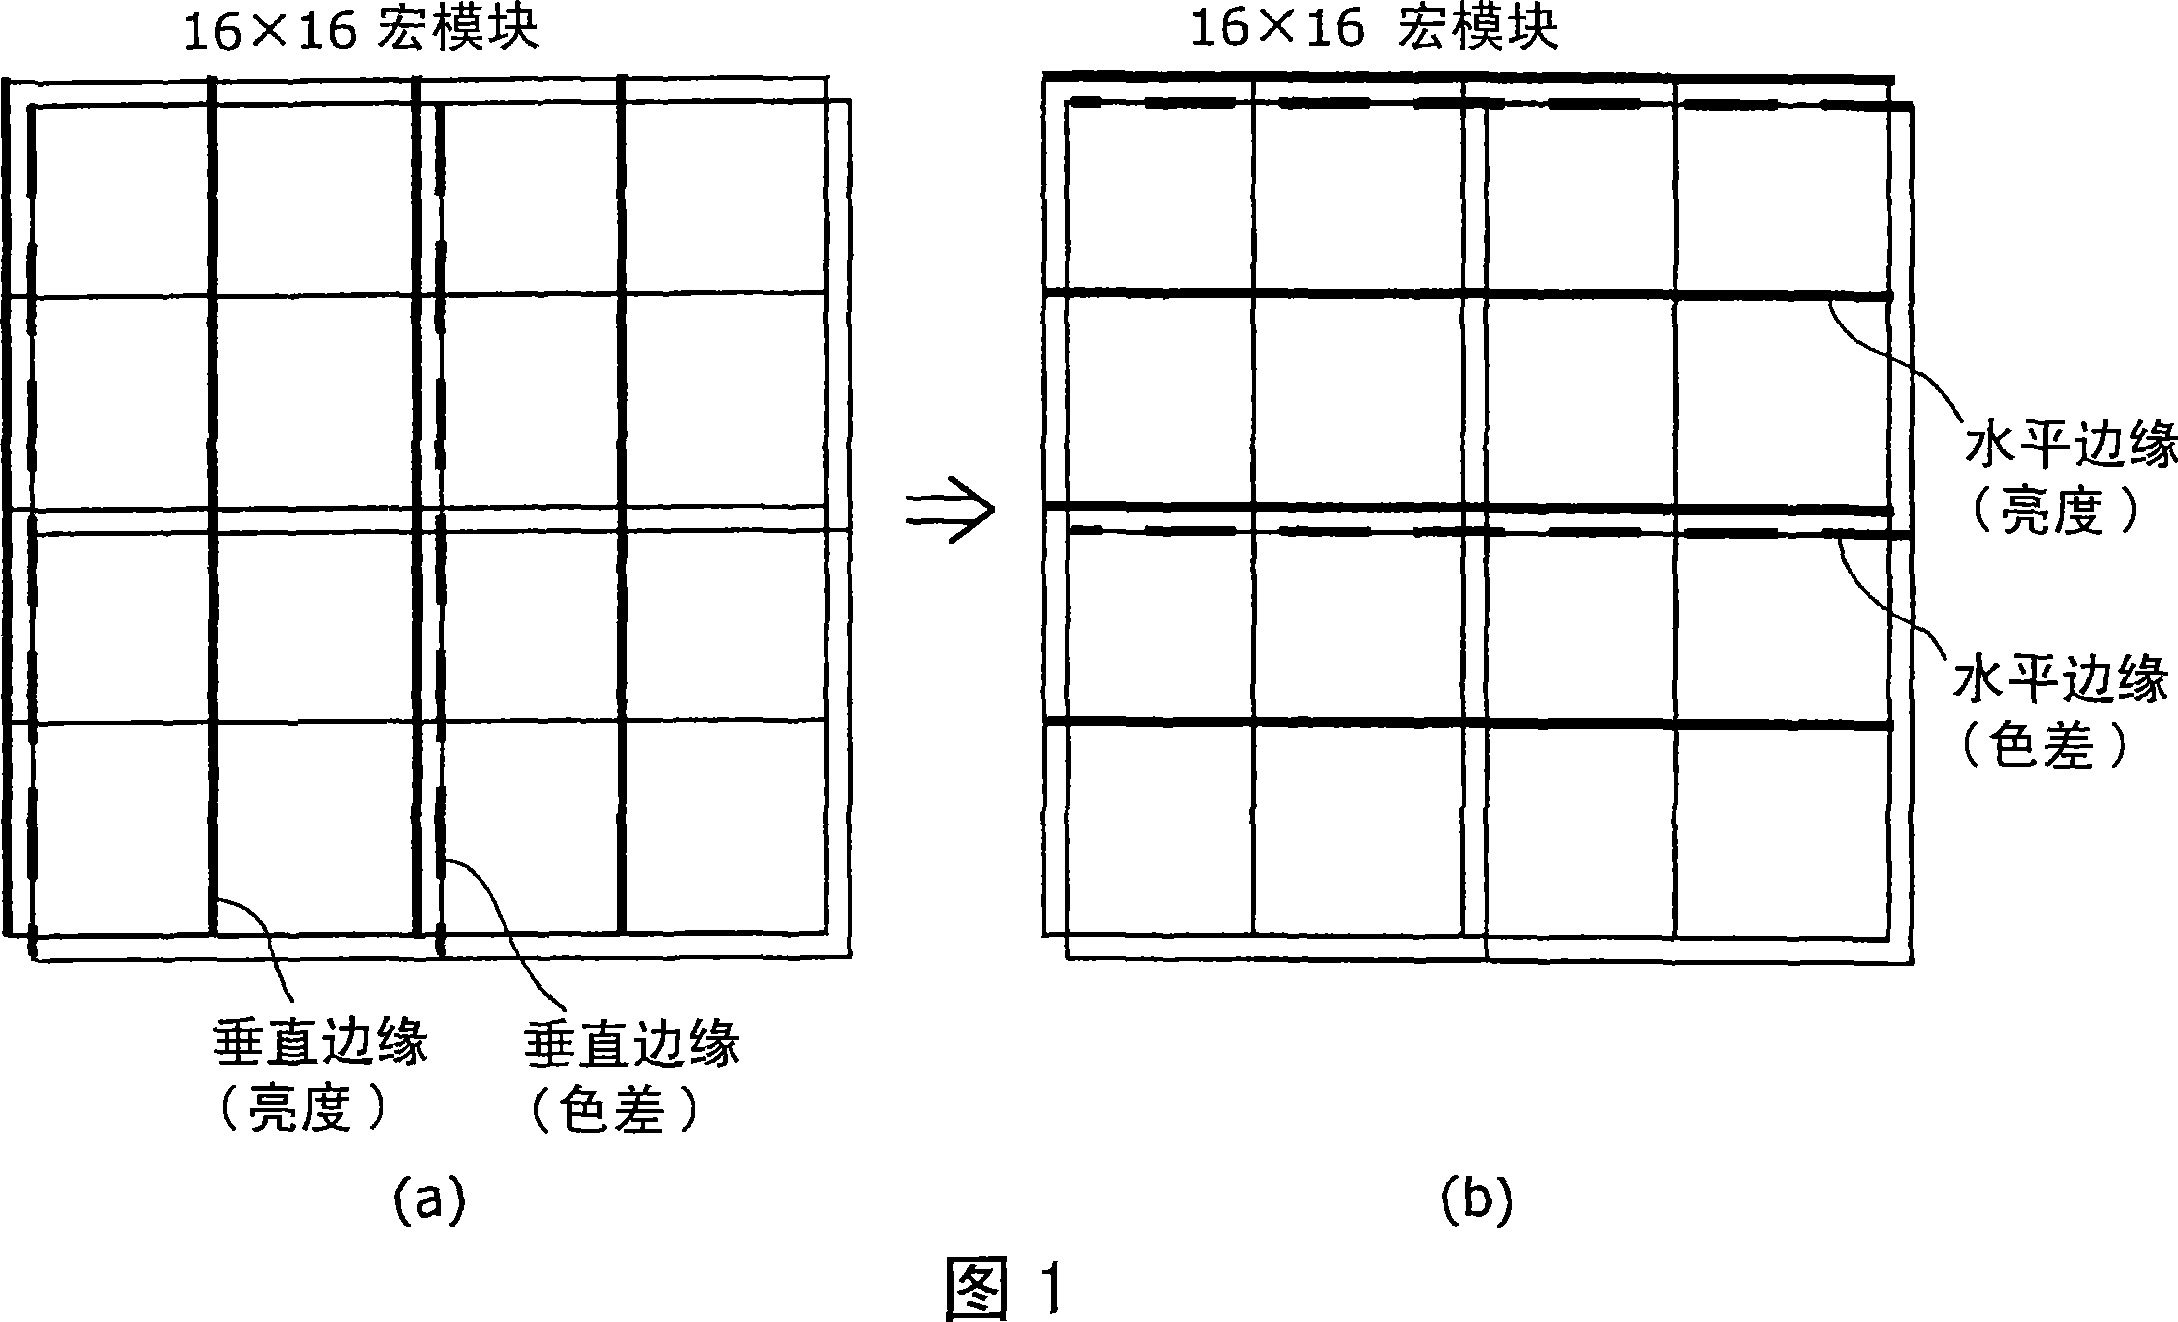 Image decoding device and image encoding device